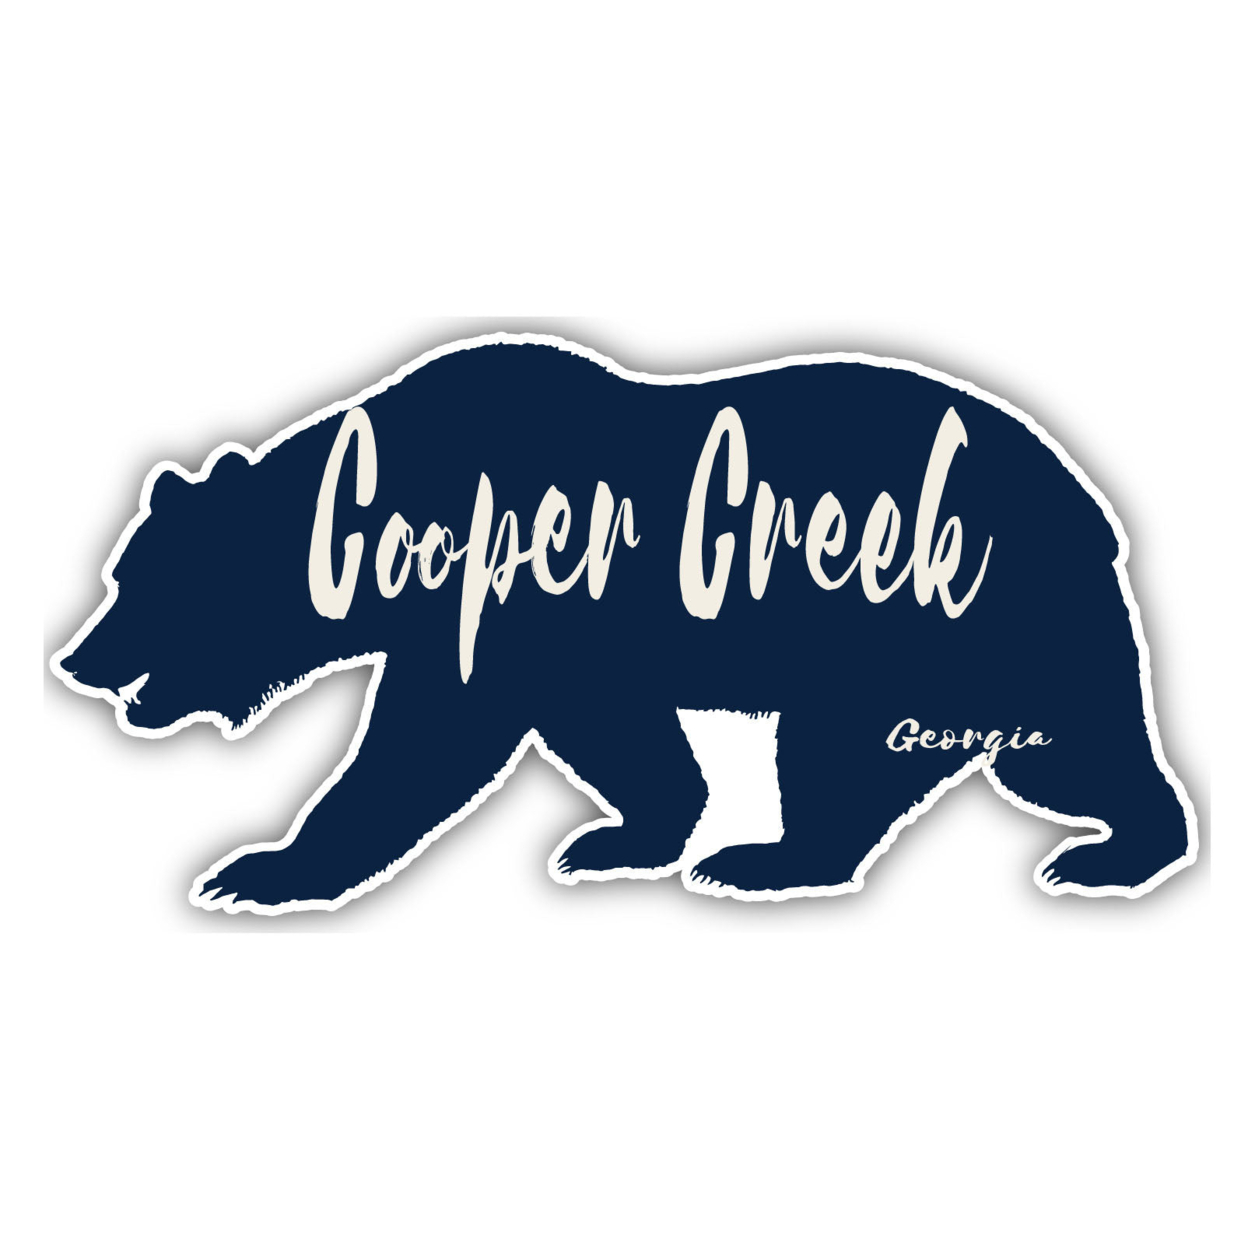 Cooper Creek Georgia Souvenir Decorative Stickers (Choose Theme And Size) - Single Unit, 10-Inch, Bear